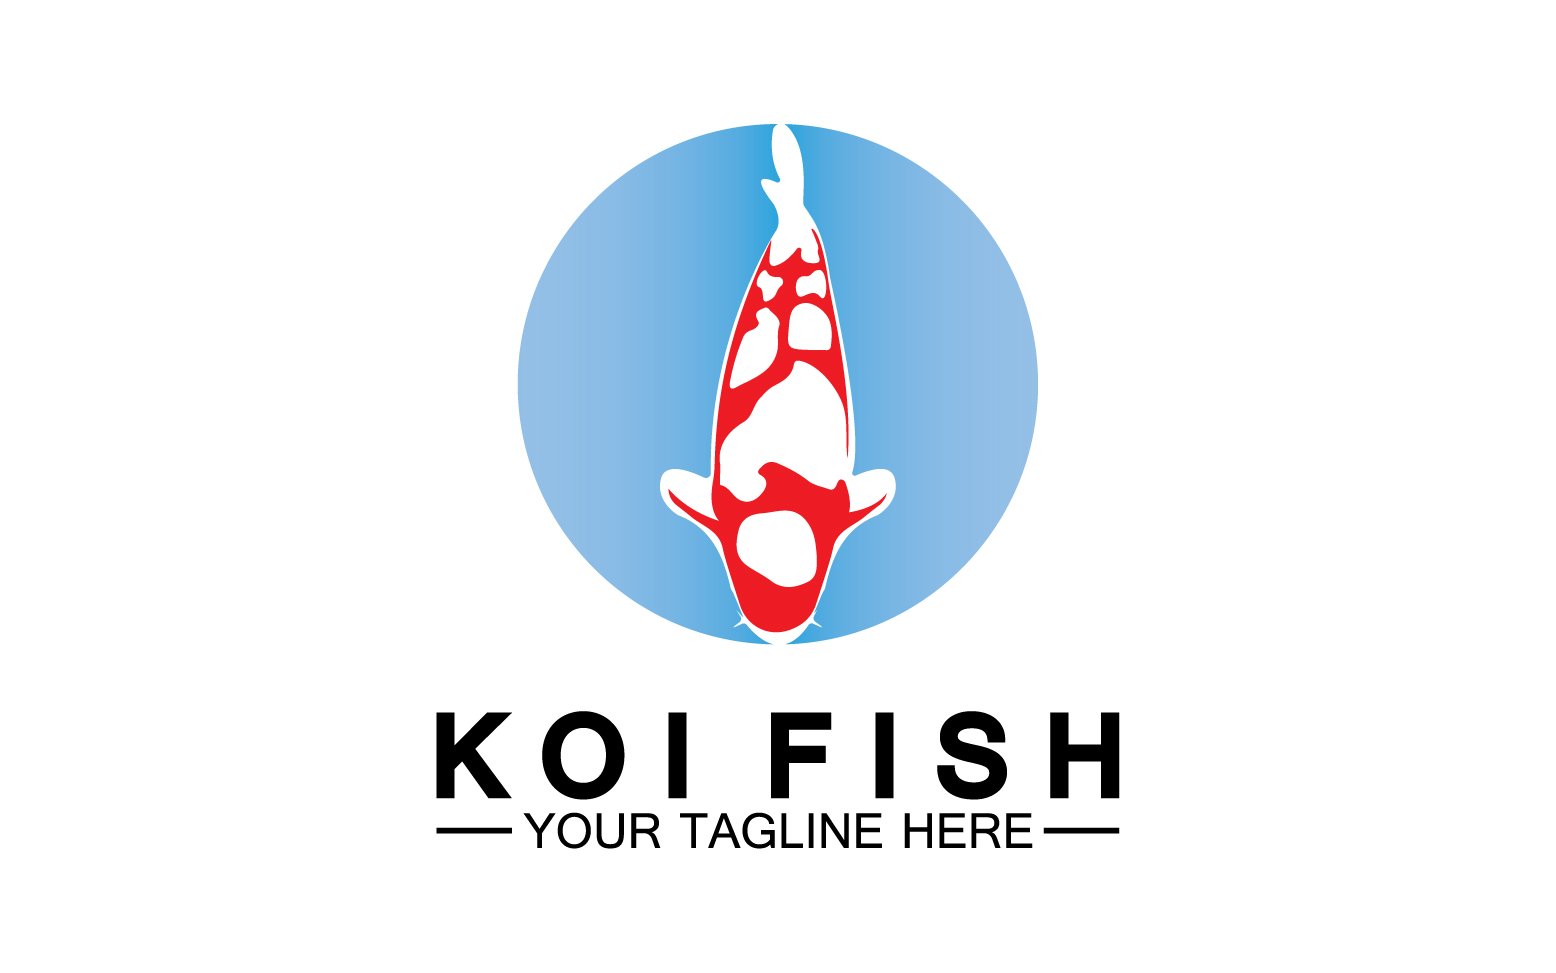 Fish koi black and red icon logo vector v28